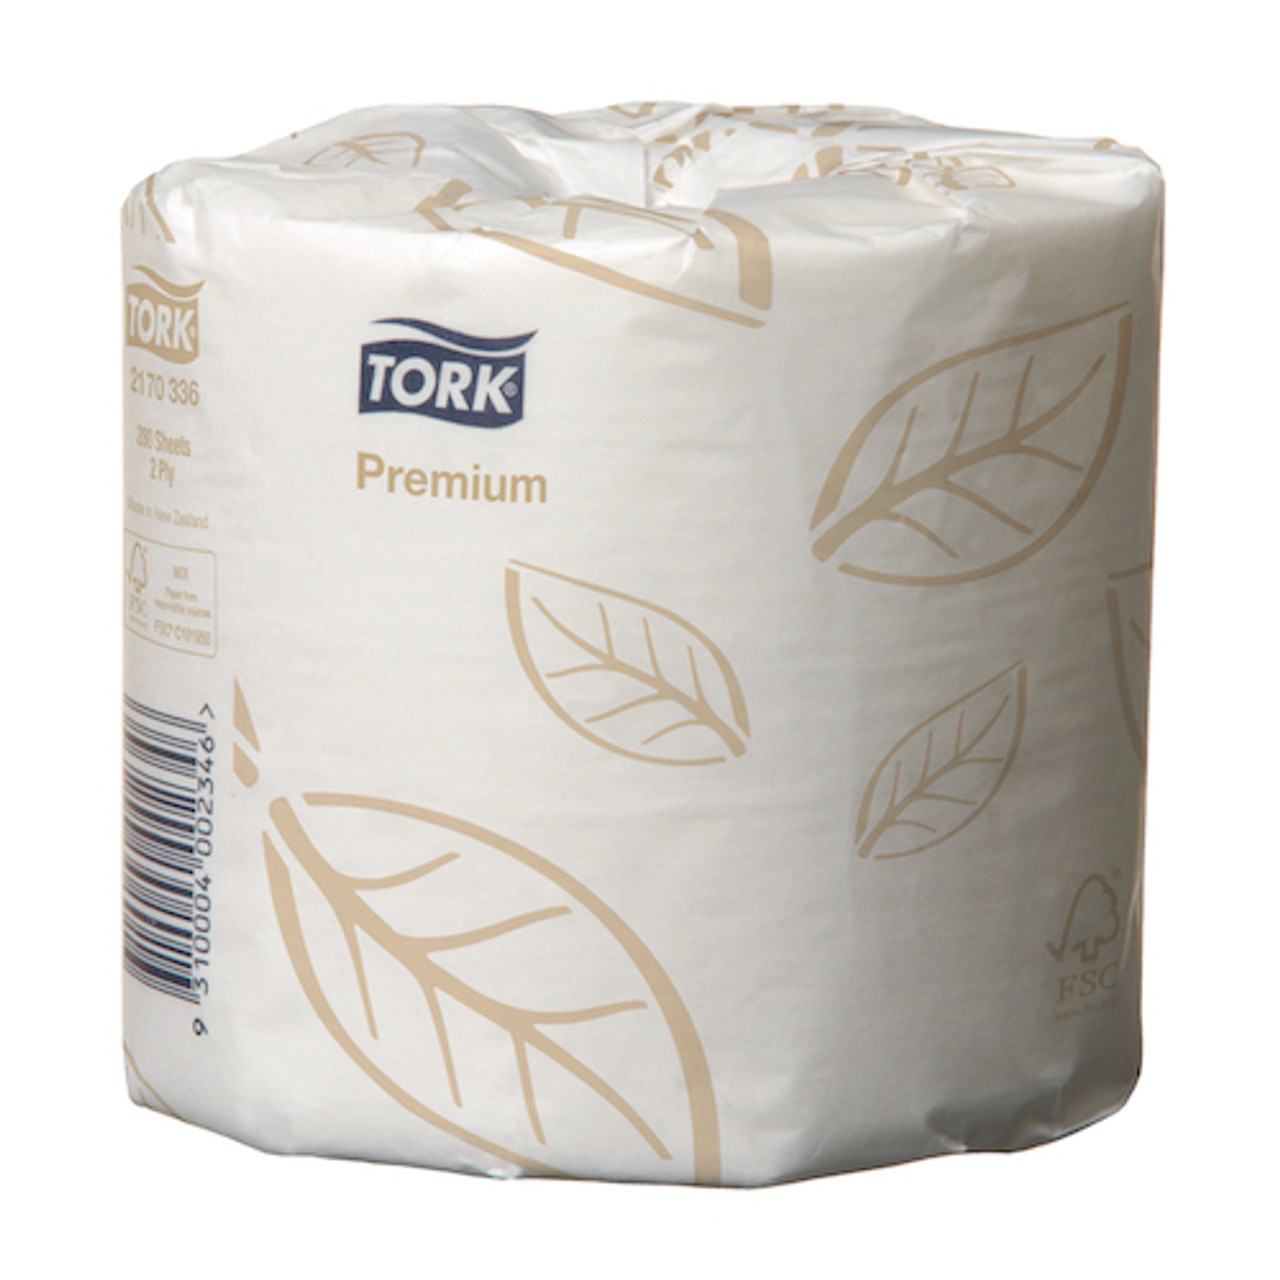 Tork Extra Soft Premium Toilet Paper 48 Rolls x 280 sheets (2170336)